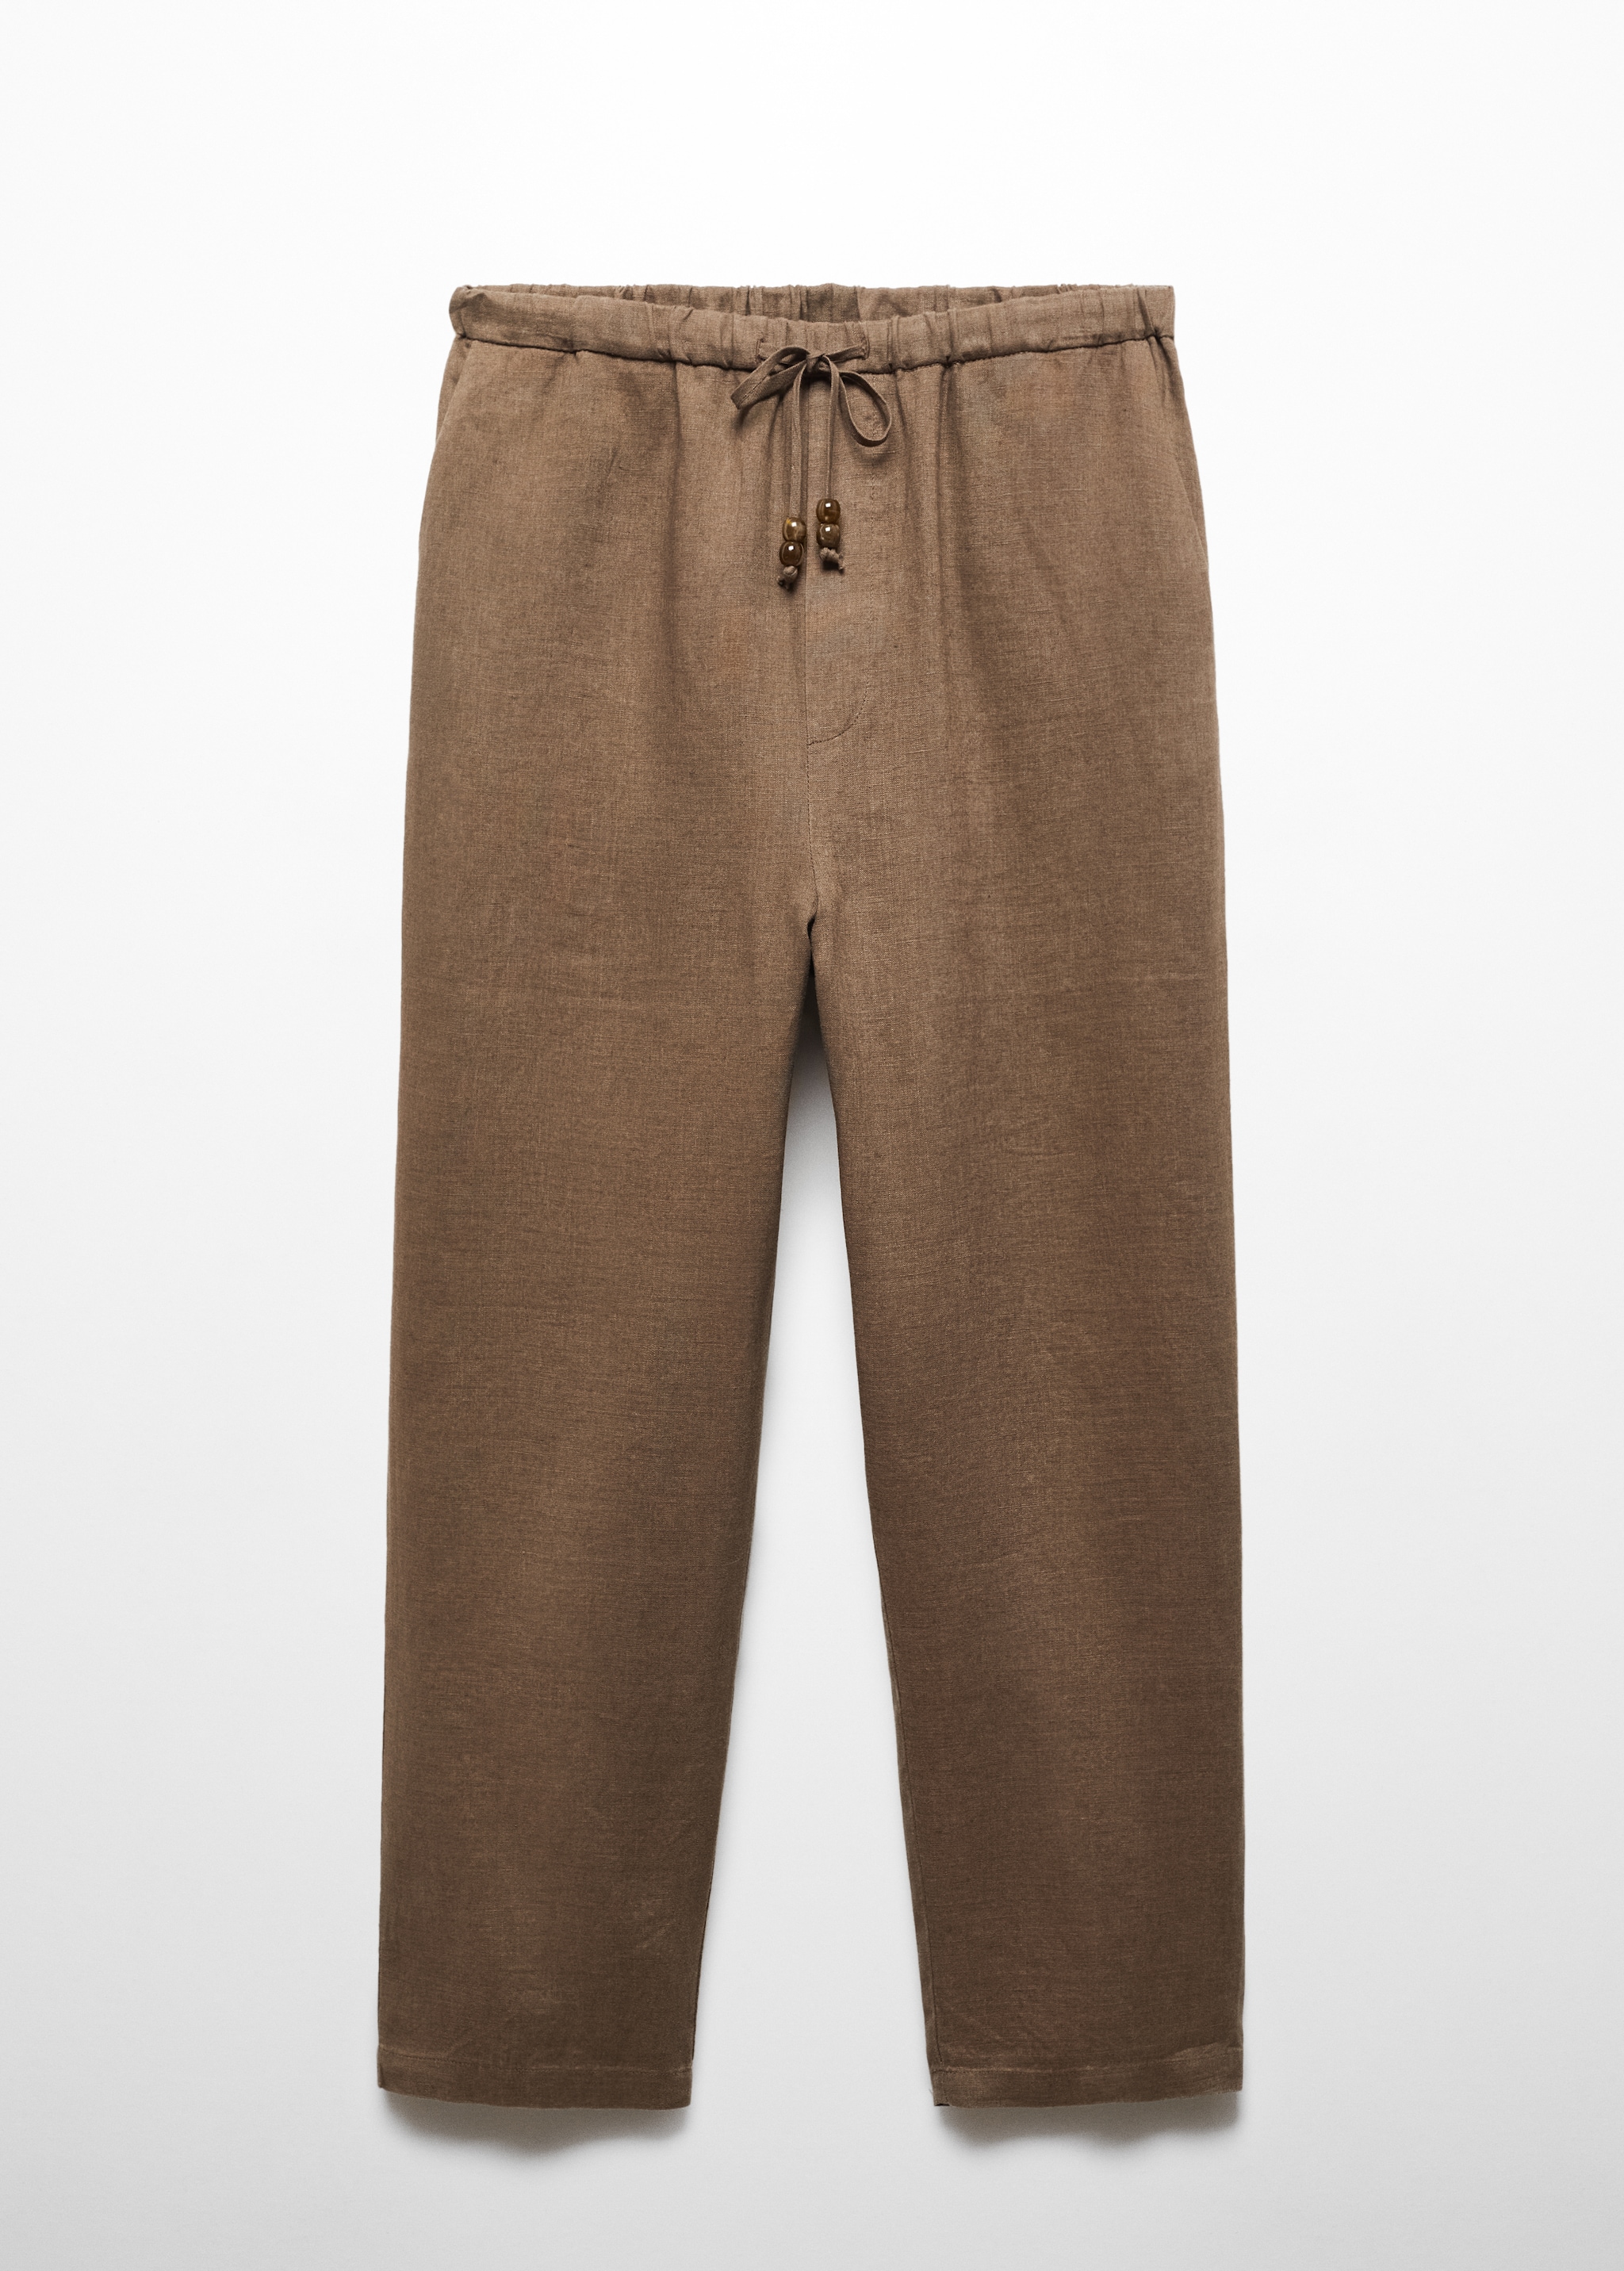 Pantalón 100% lino - Artículo sin modelo